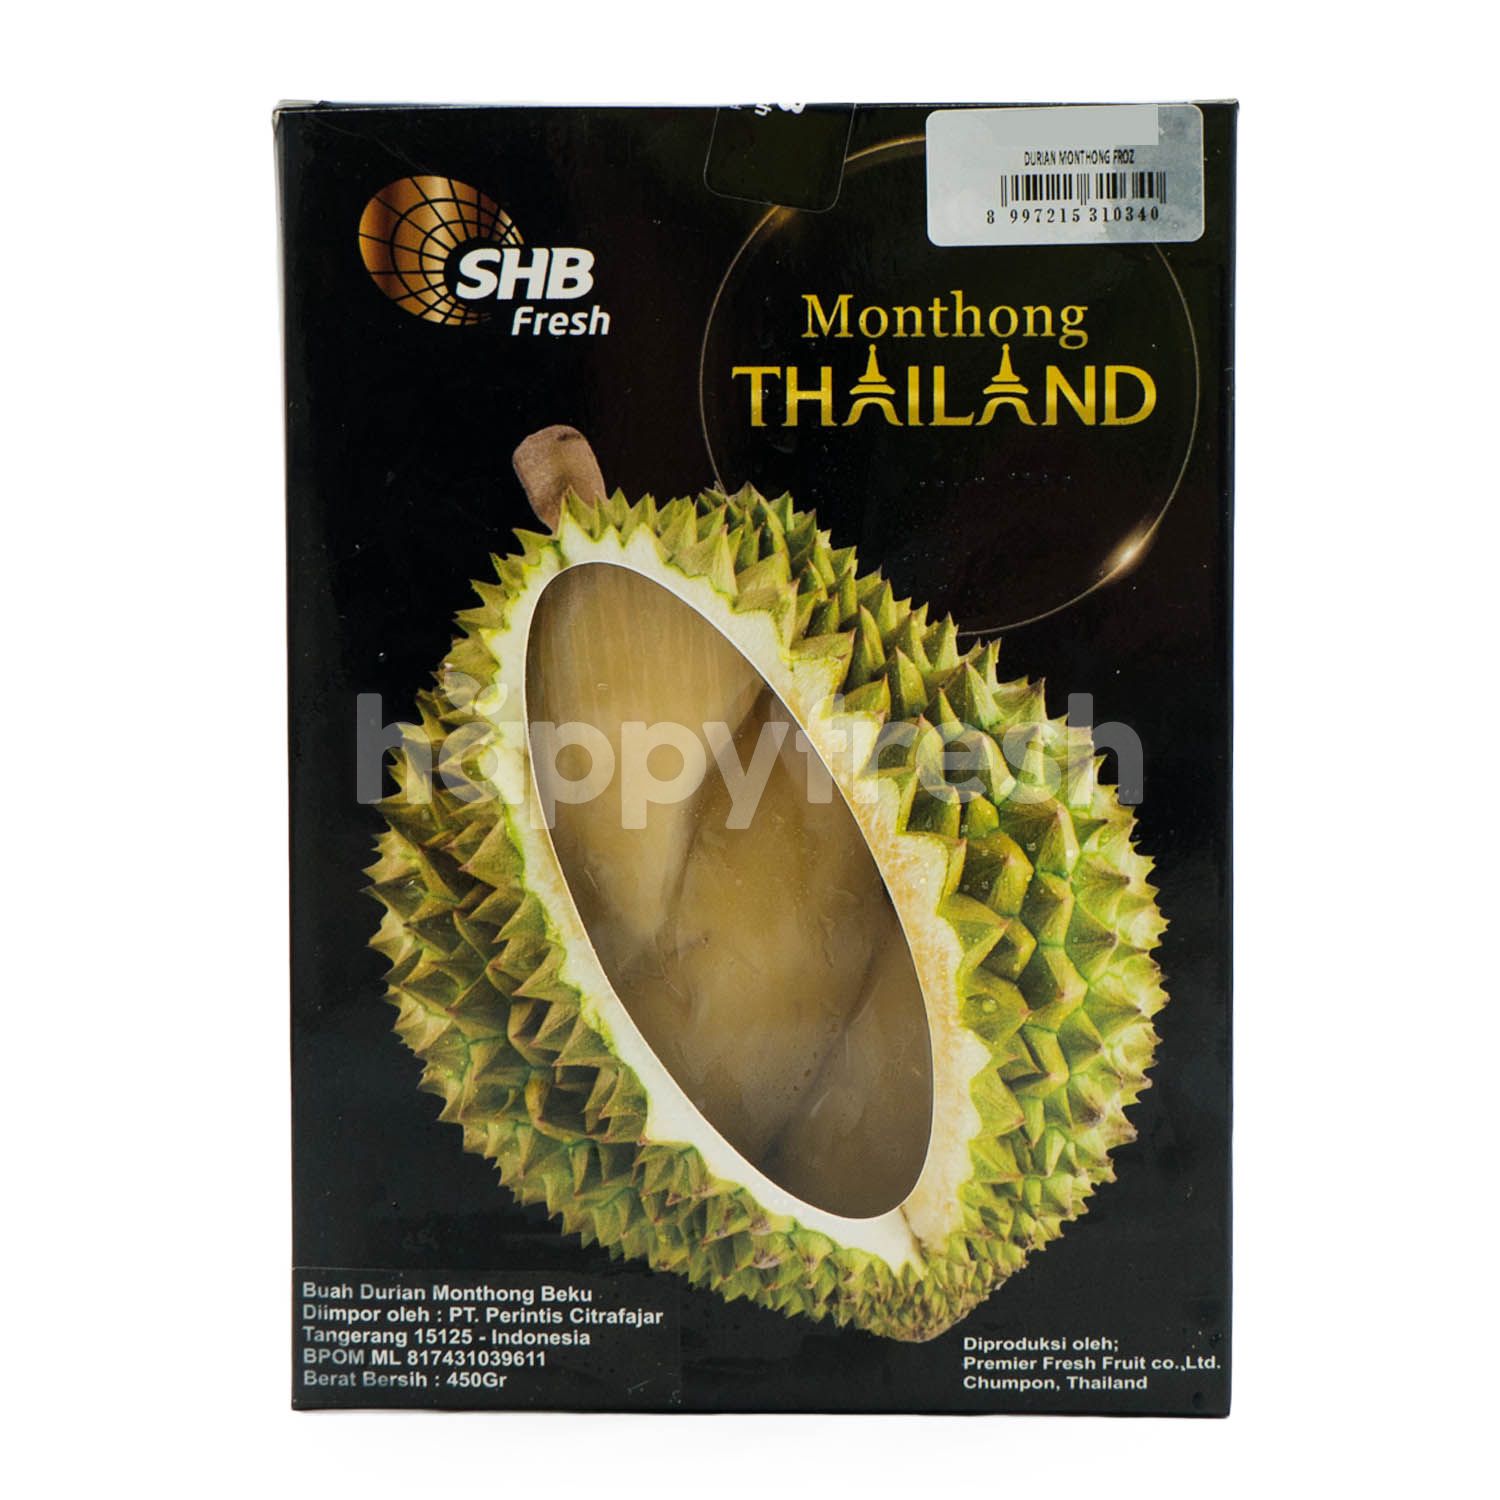 Duriand bintaro